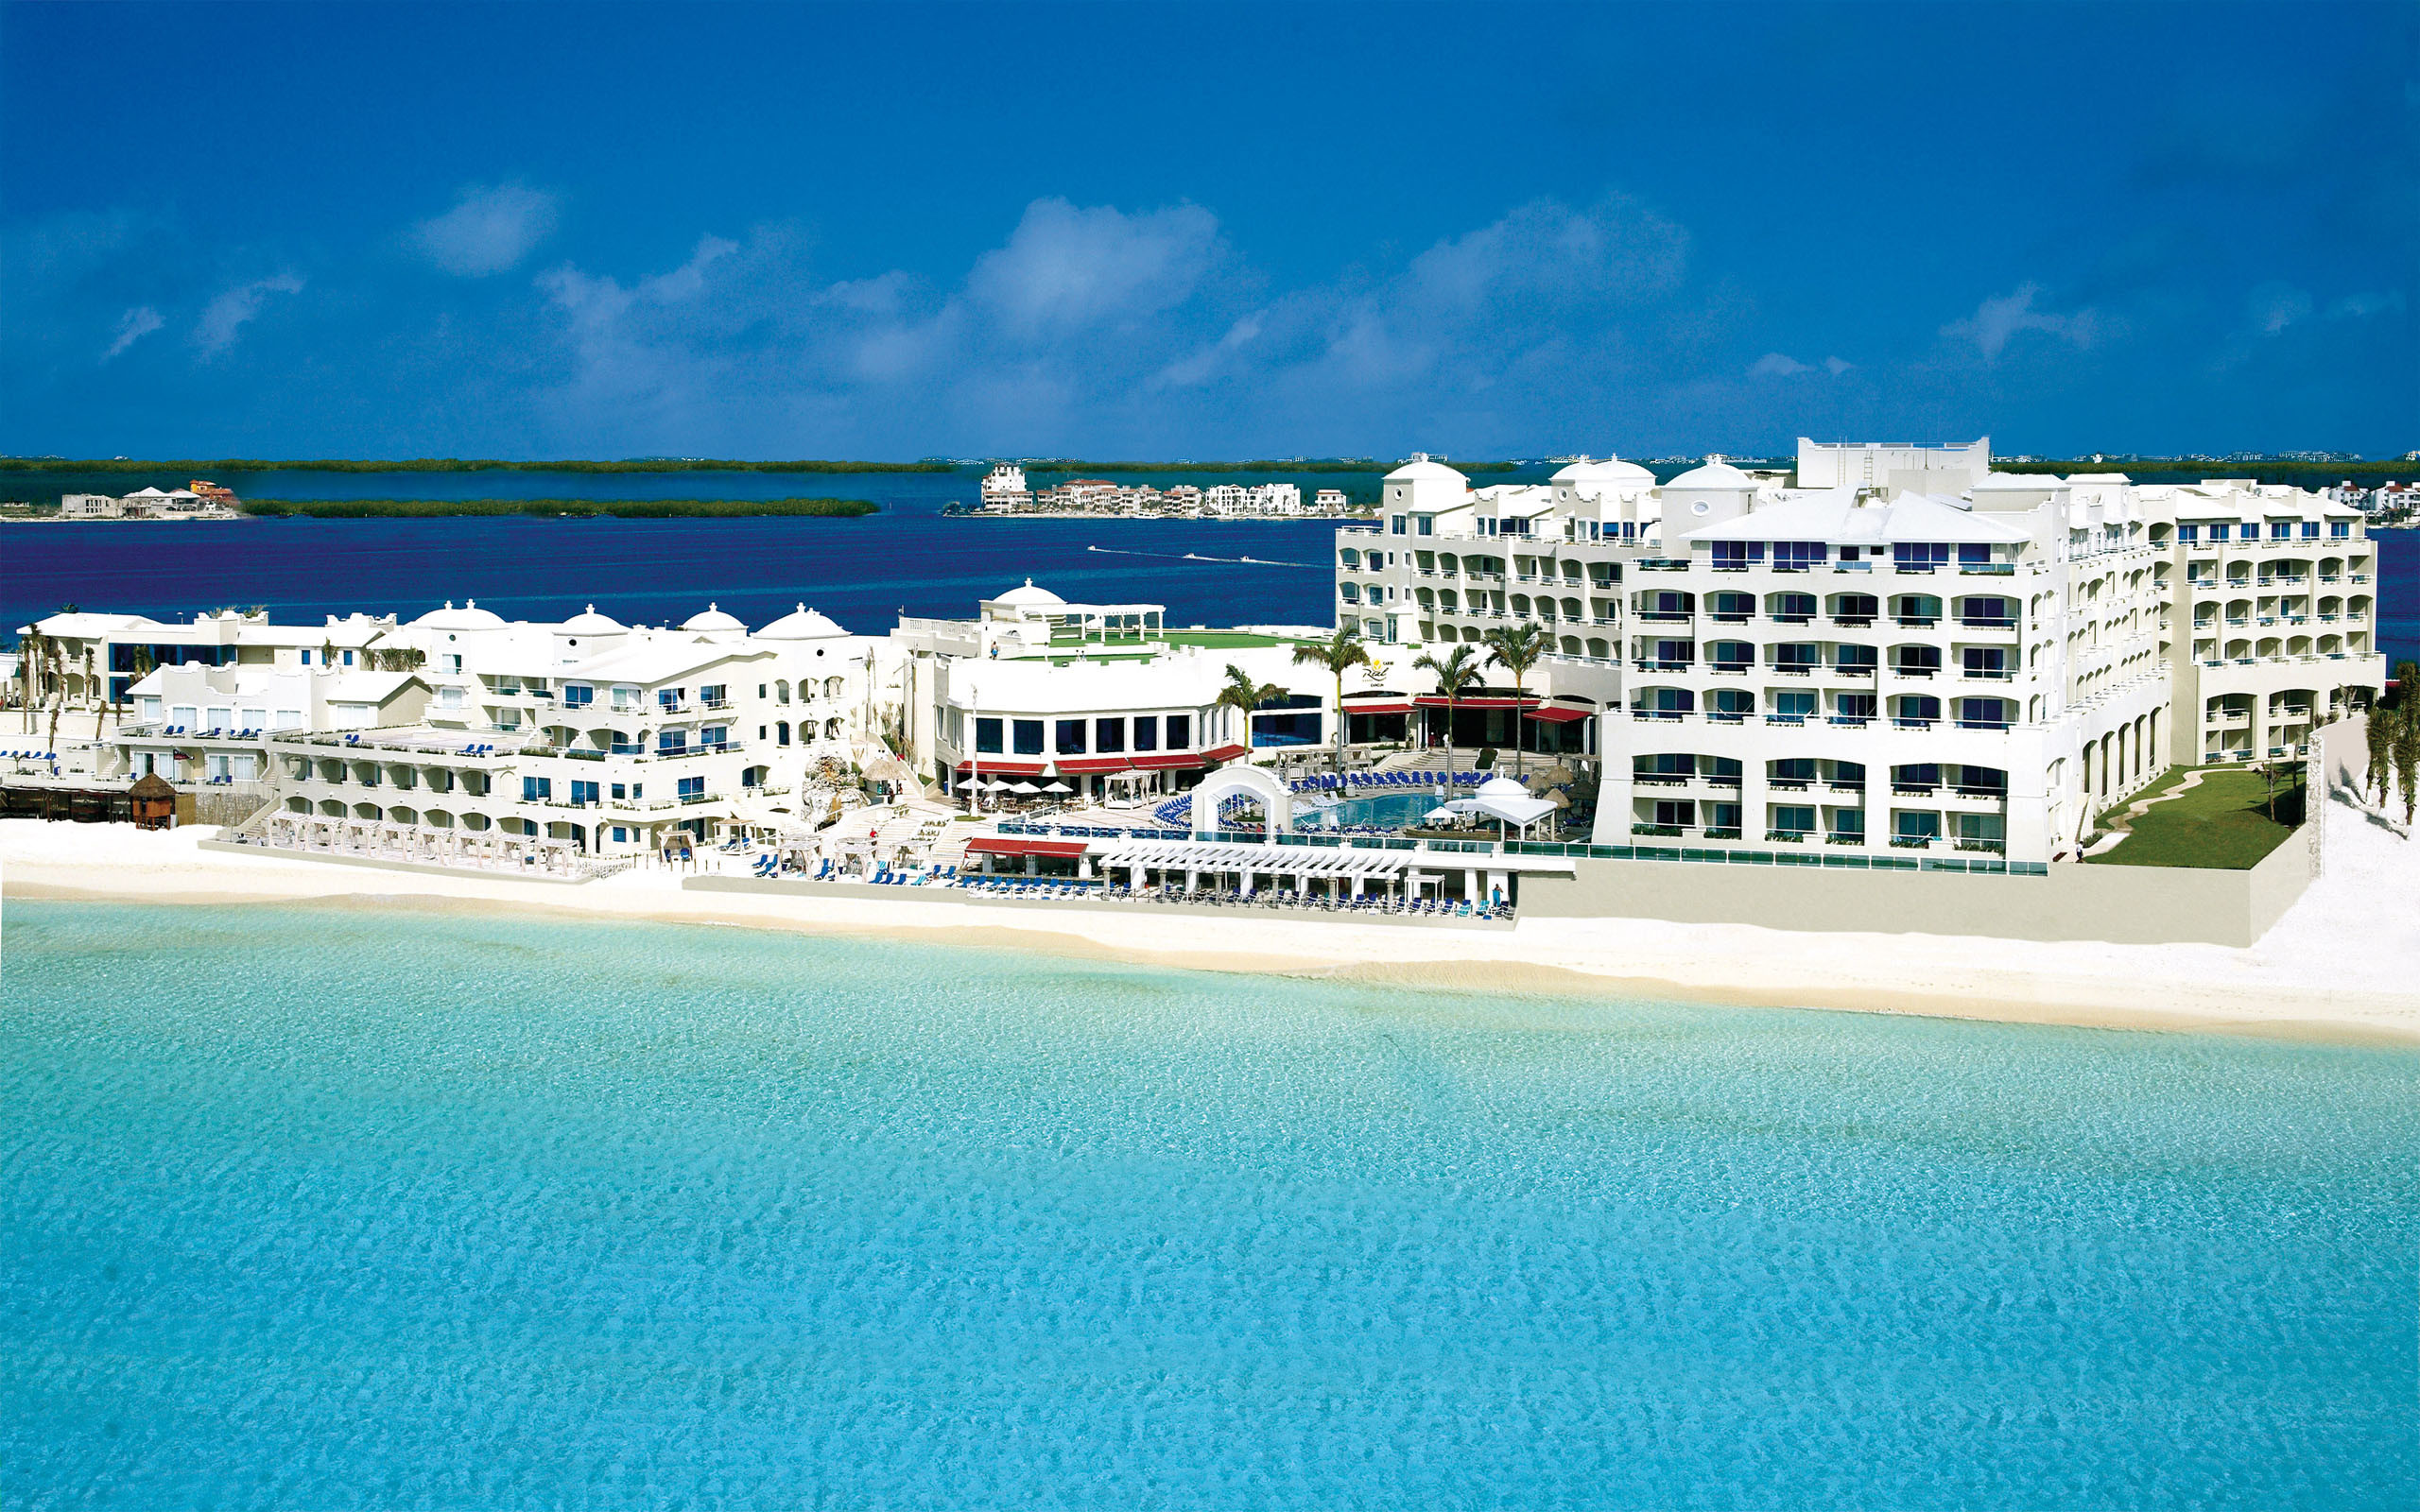 2560x1600 Cancun Resorts